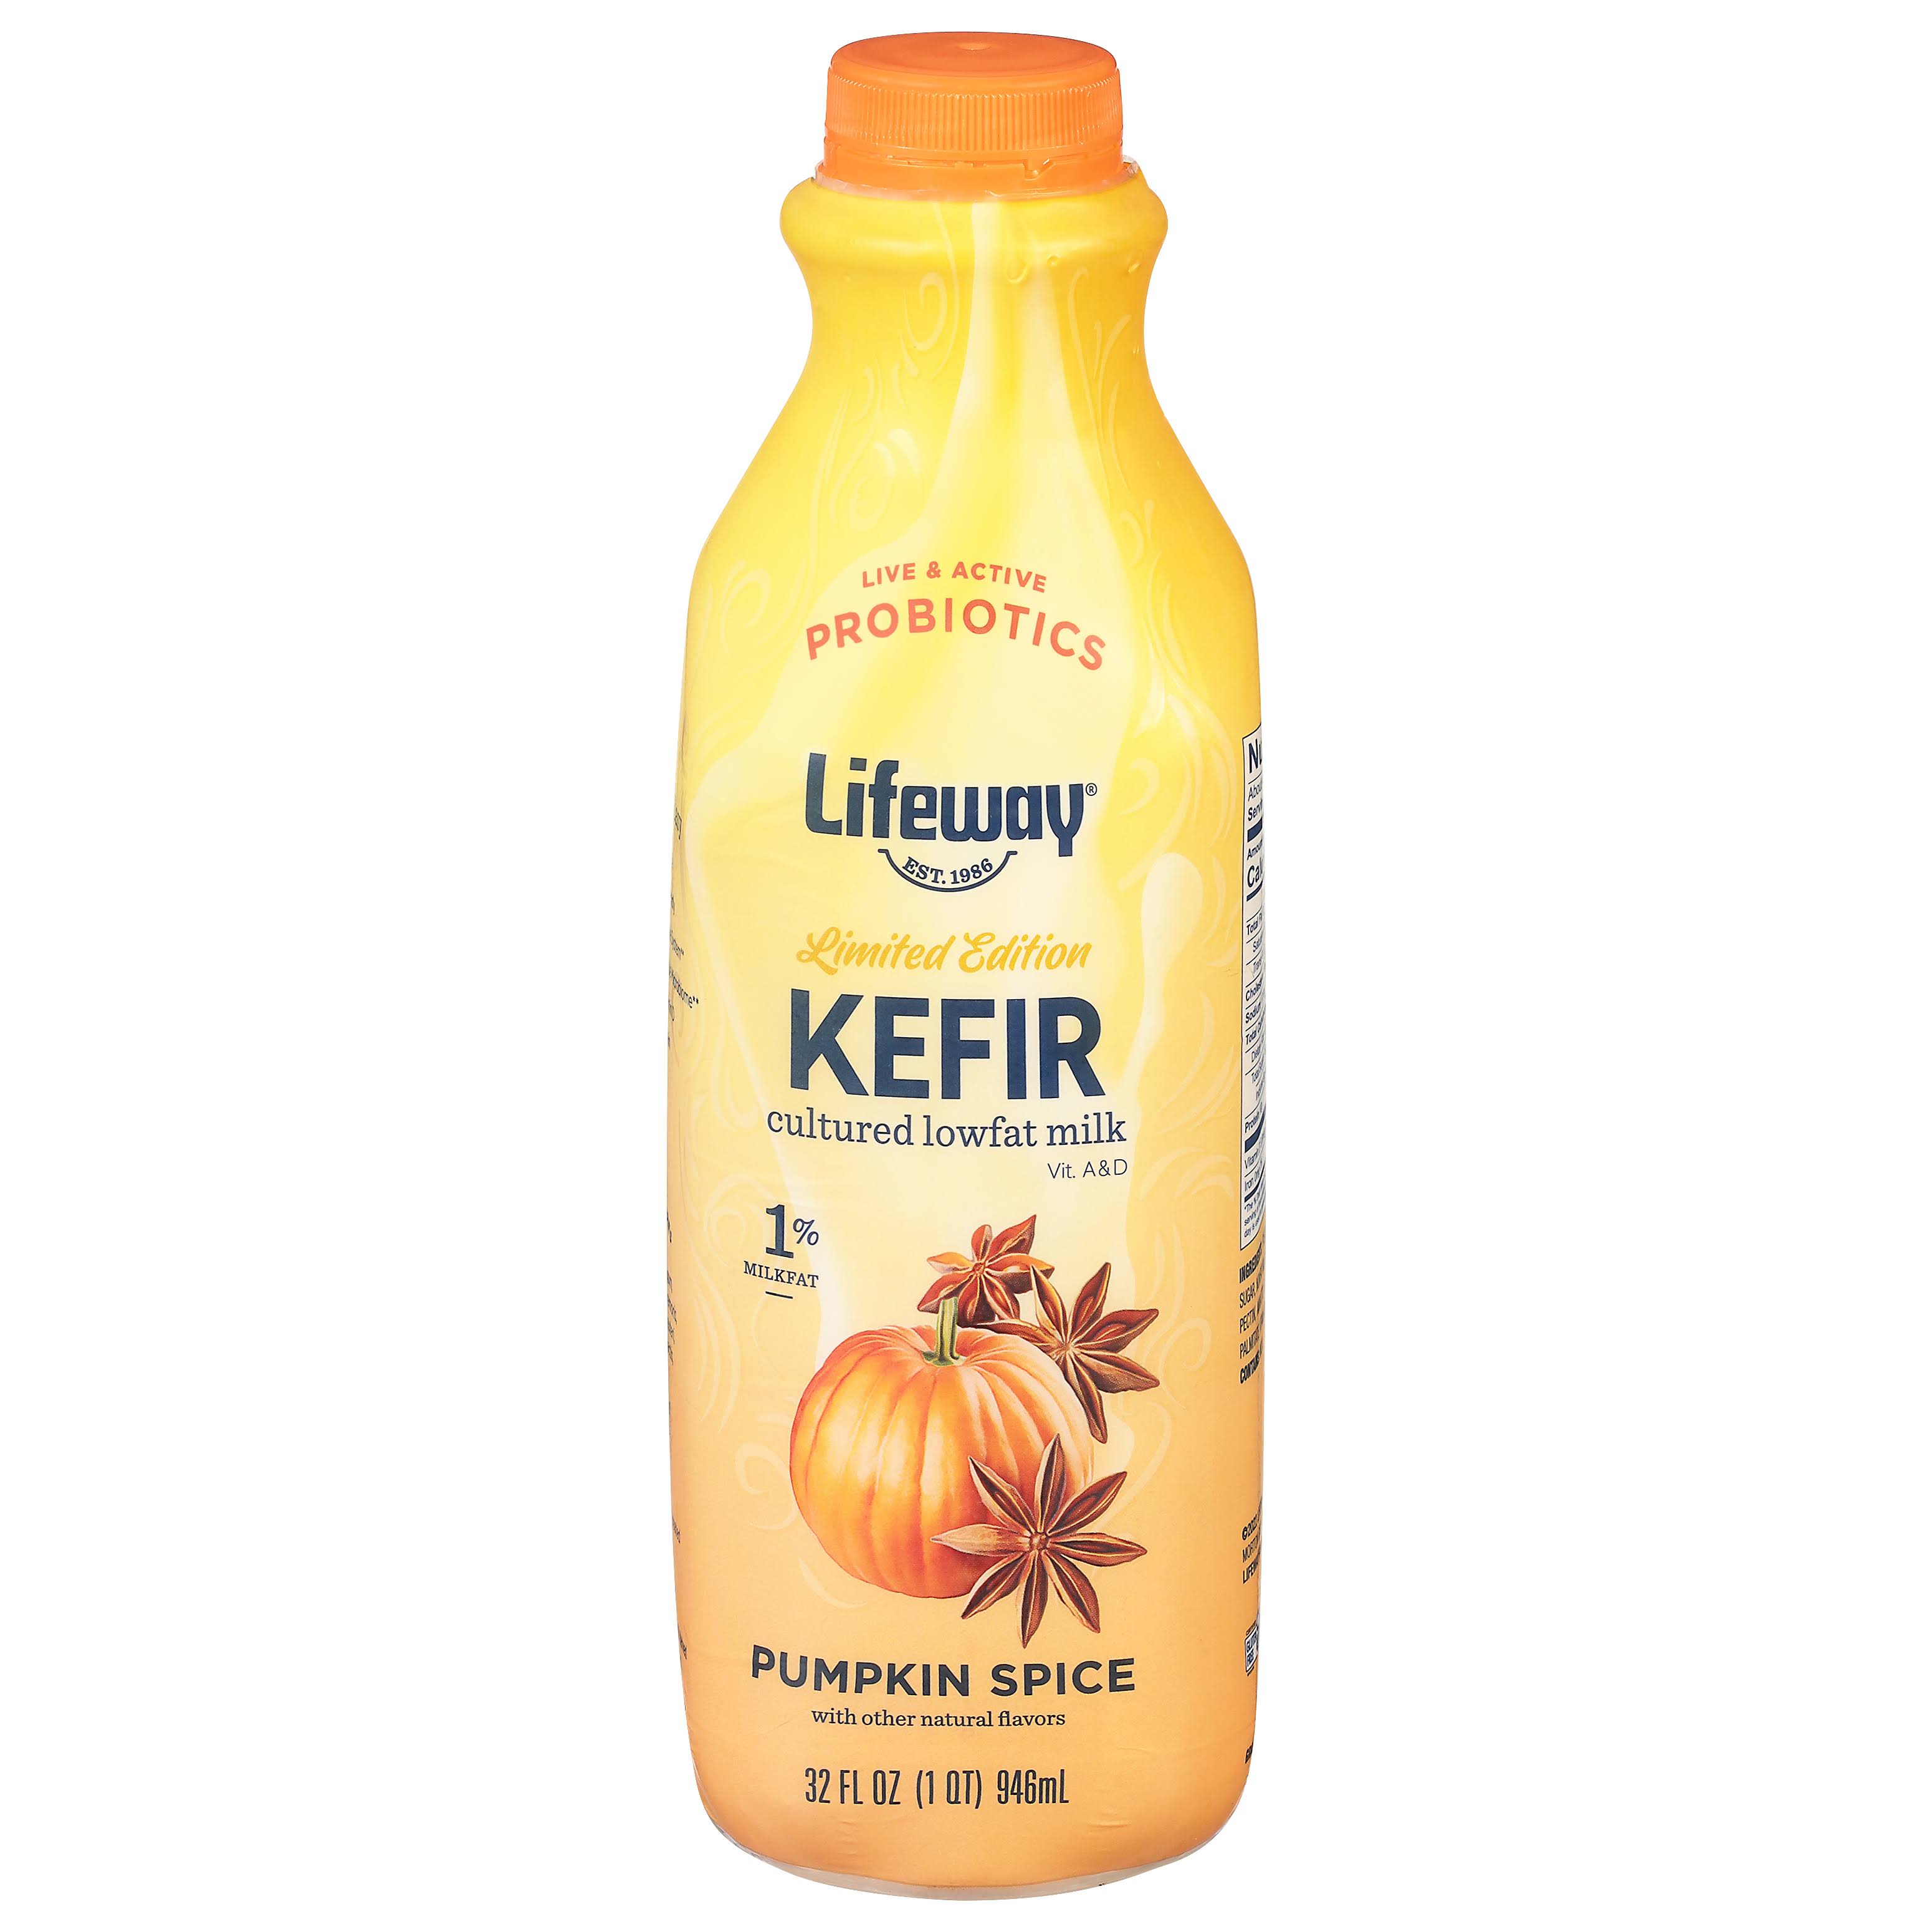 Lifeway Kefir Lowfat Cultured Milk Smoothie Pumpkin Spice - 32 fl oz